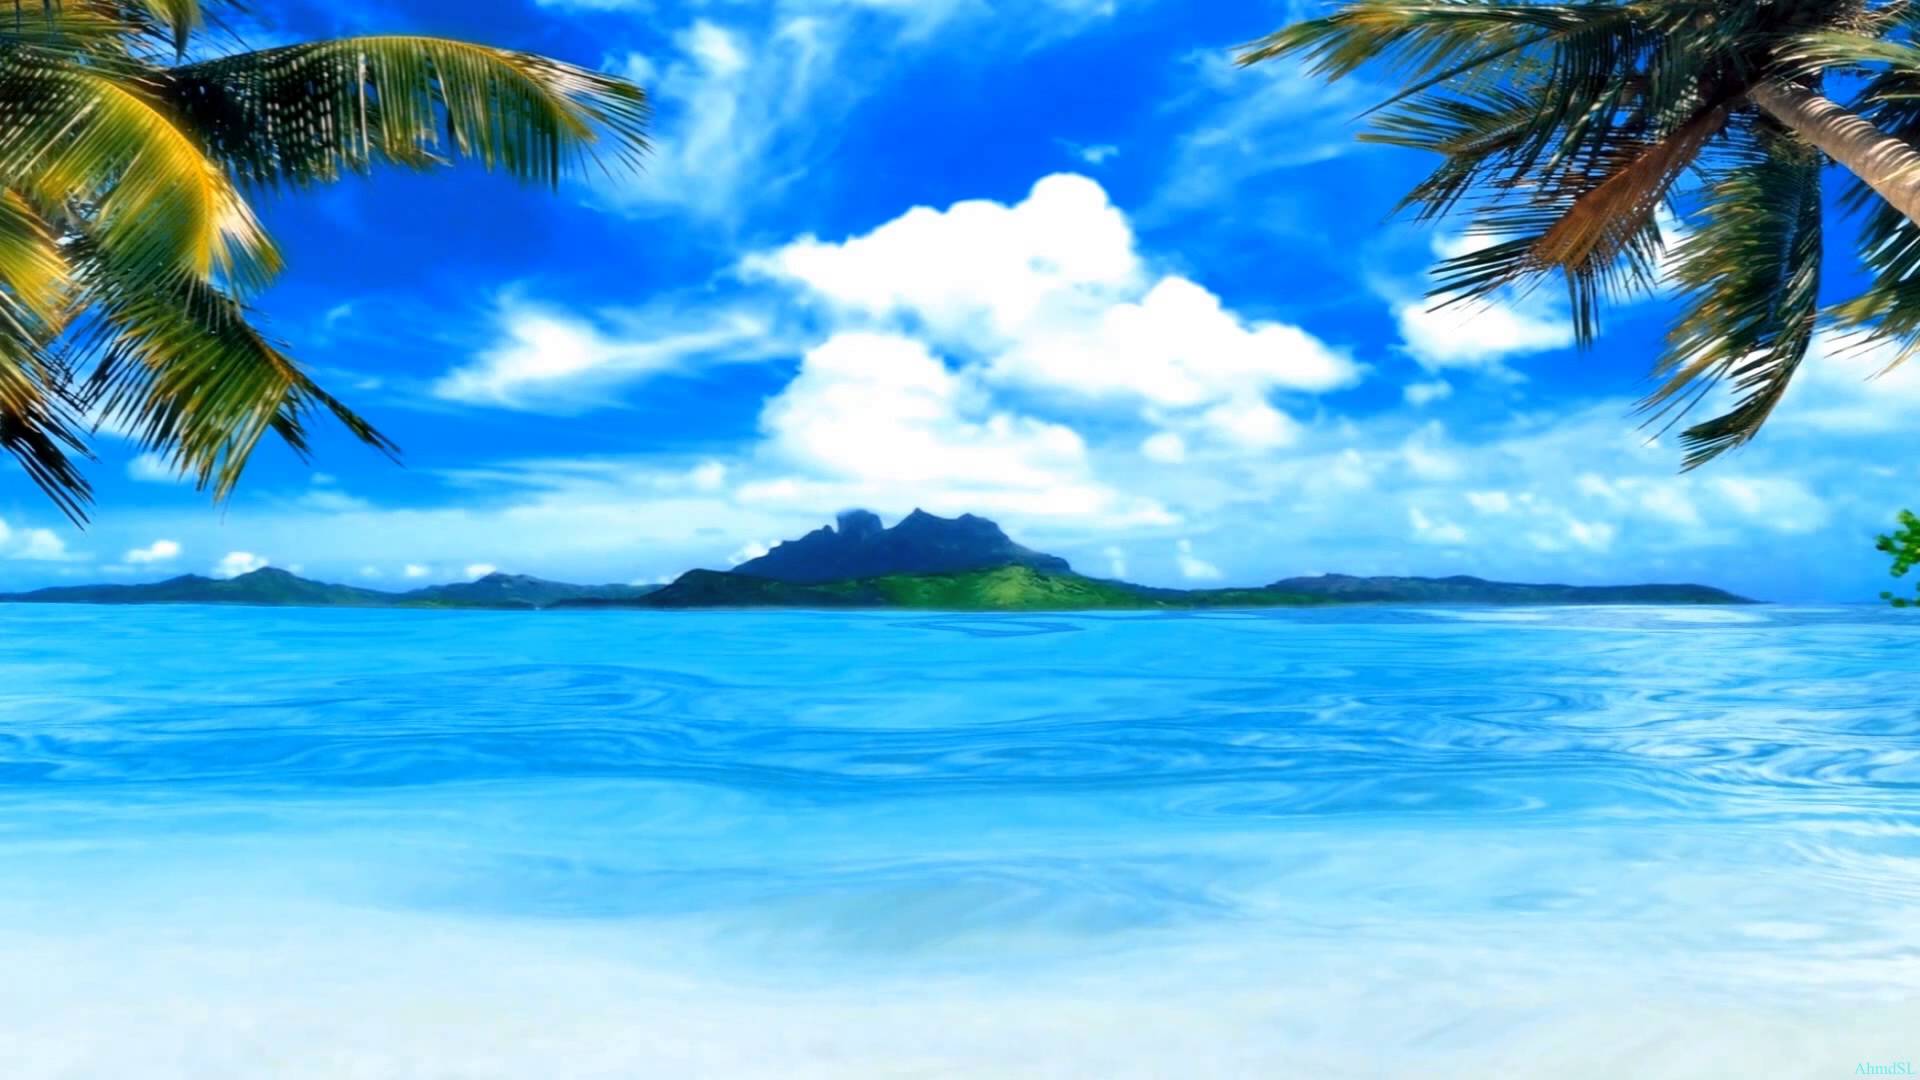 Free Download Wonderful Island Beach Animated Wallpapers 1920x1080